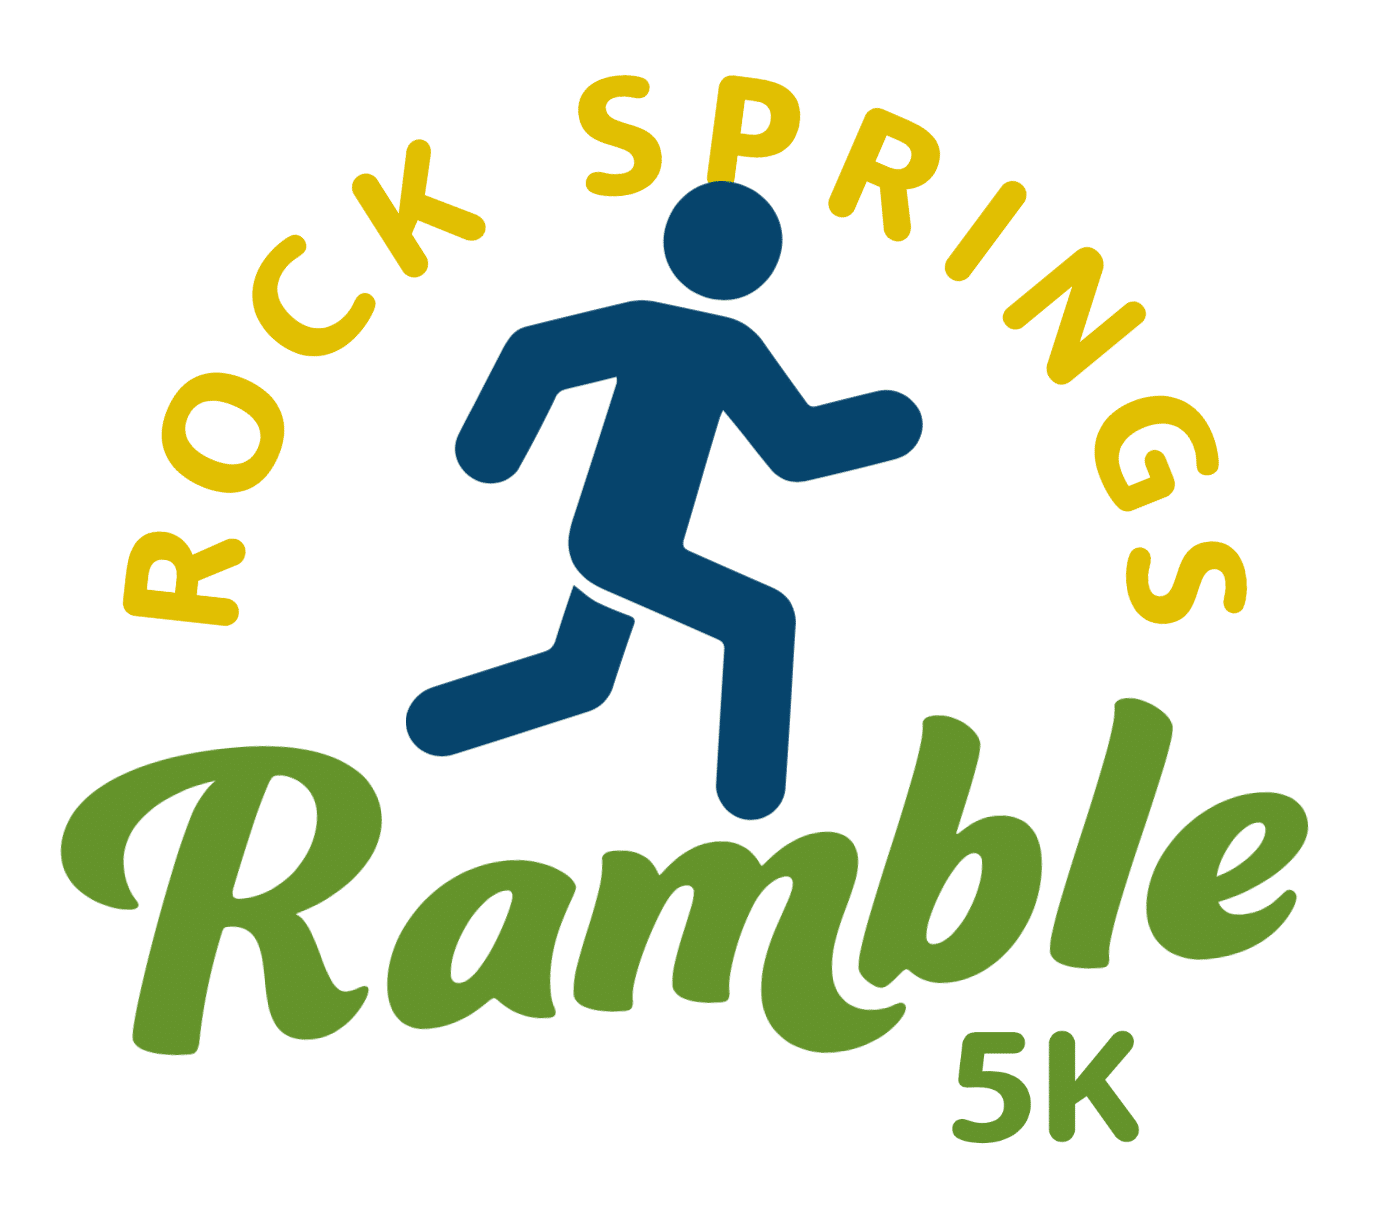 Rock Springs Ramble 5k